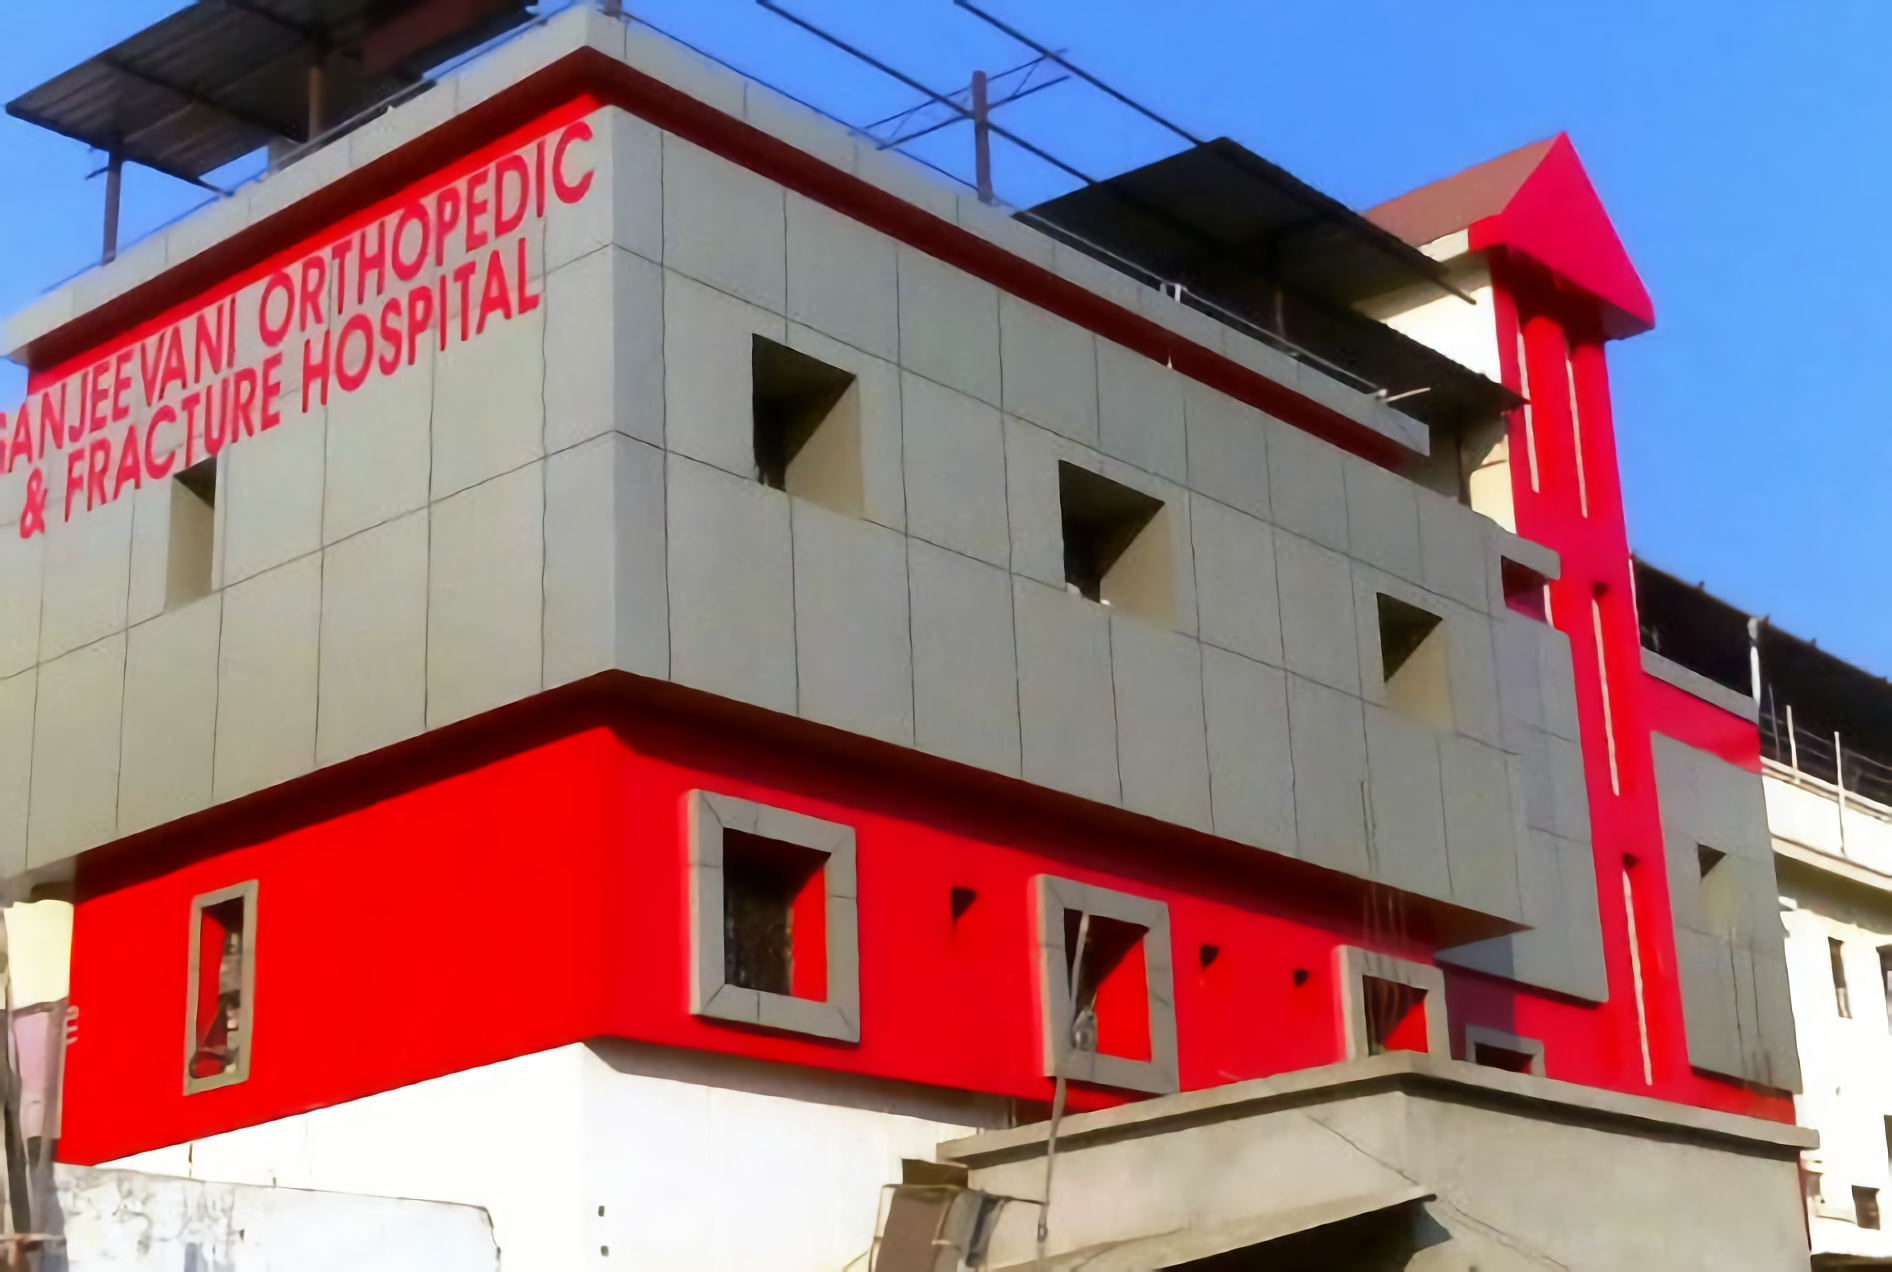 Sanjeevani Orthopaedic And Fracture Hospital